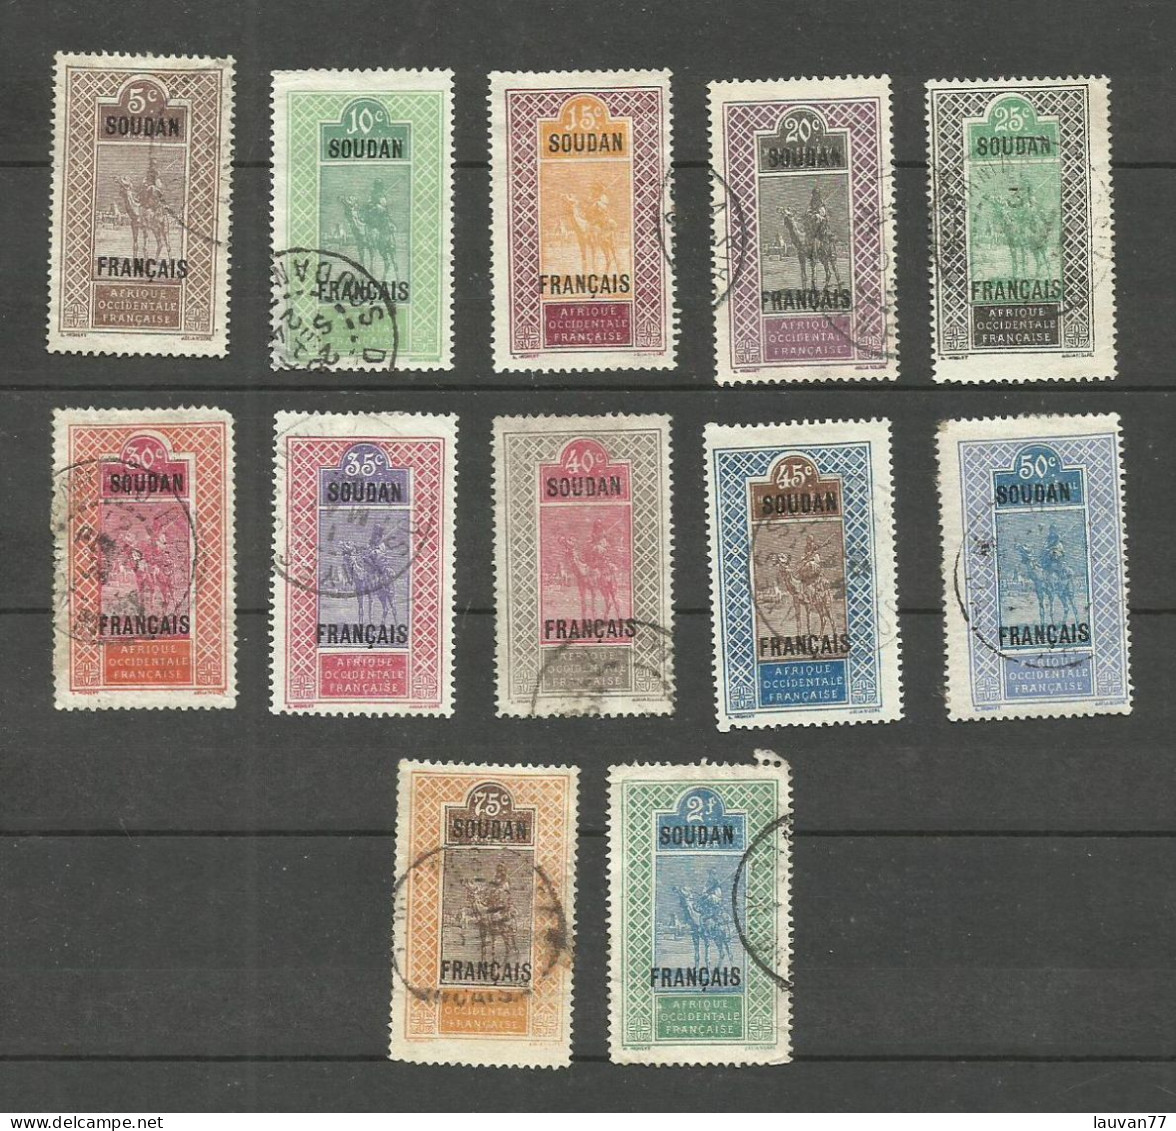 SOUDAN N°23 à 33, 35 Cote 10.30€ - Used Stamps